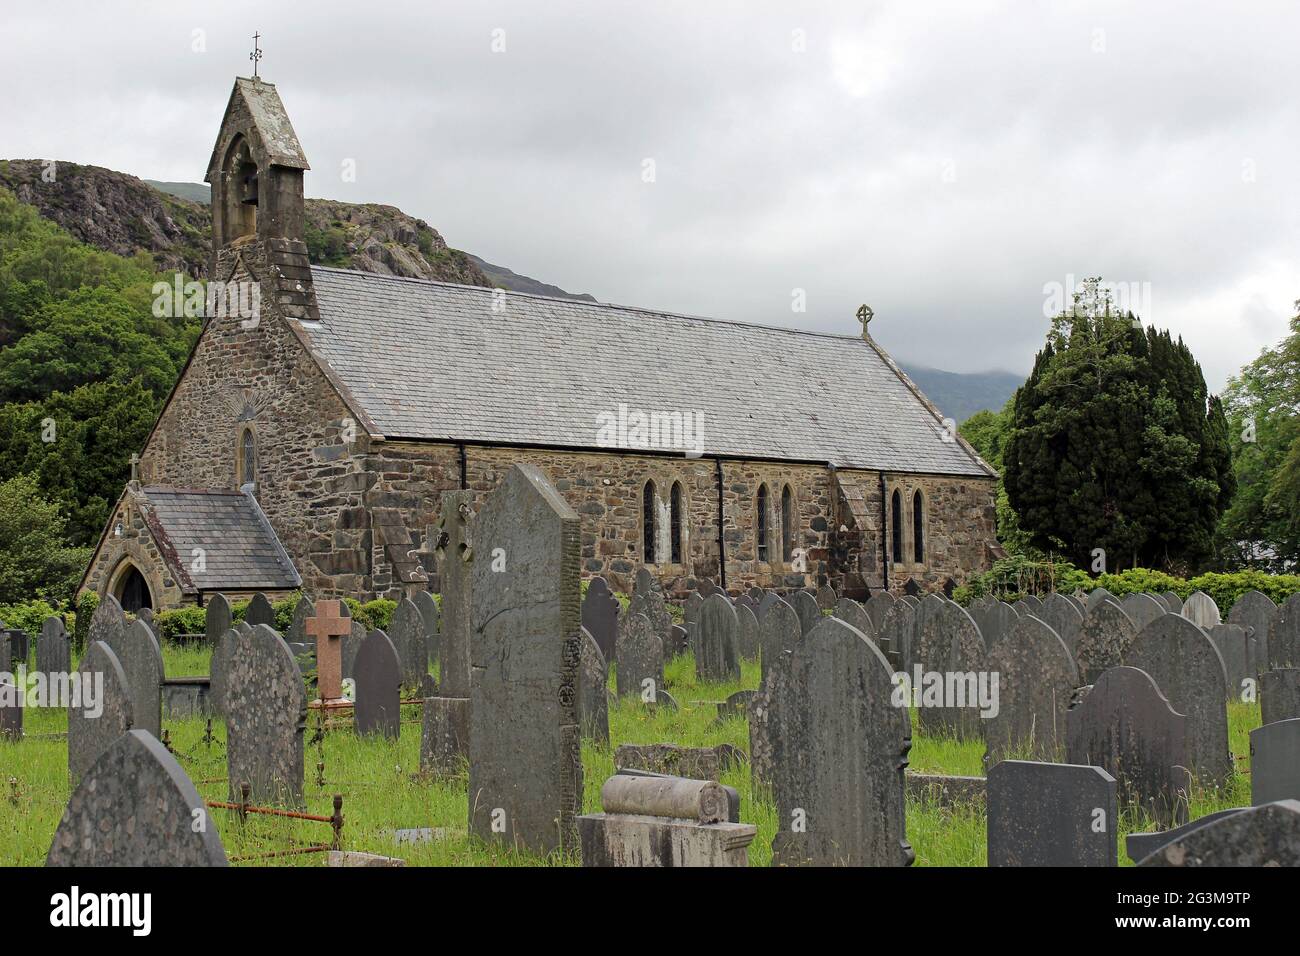 St Mary's Church and Graveyard, Beddgelert, Gwynedd, Wales Stockfoto